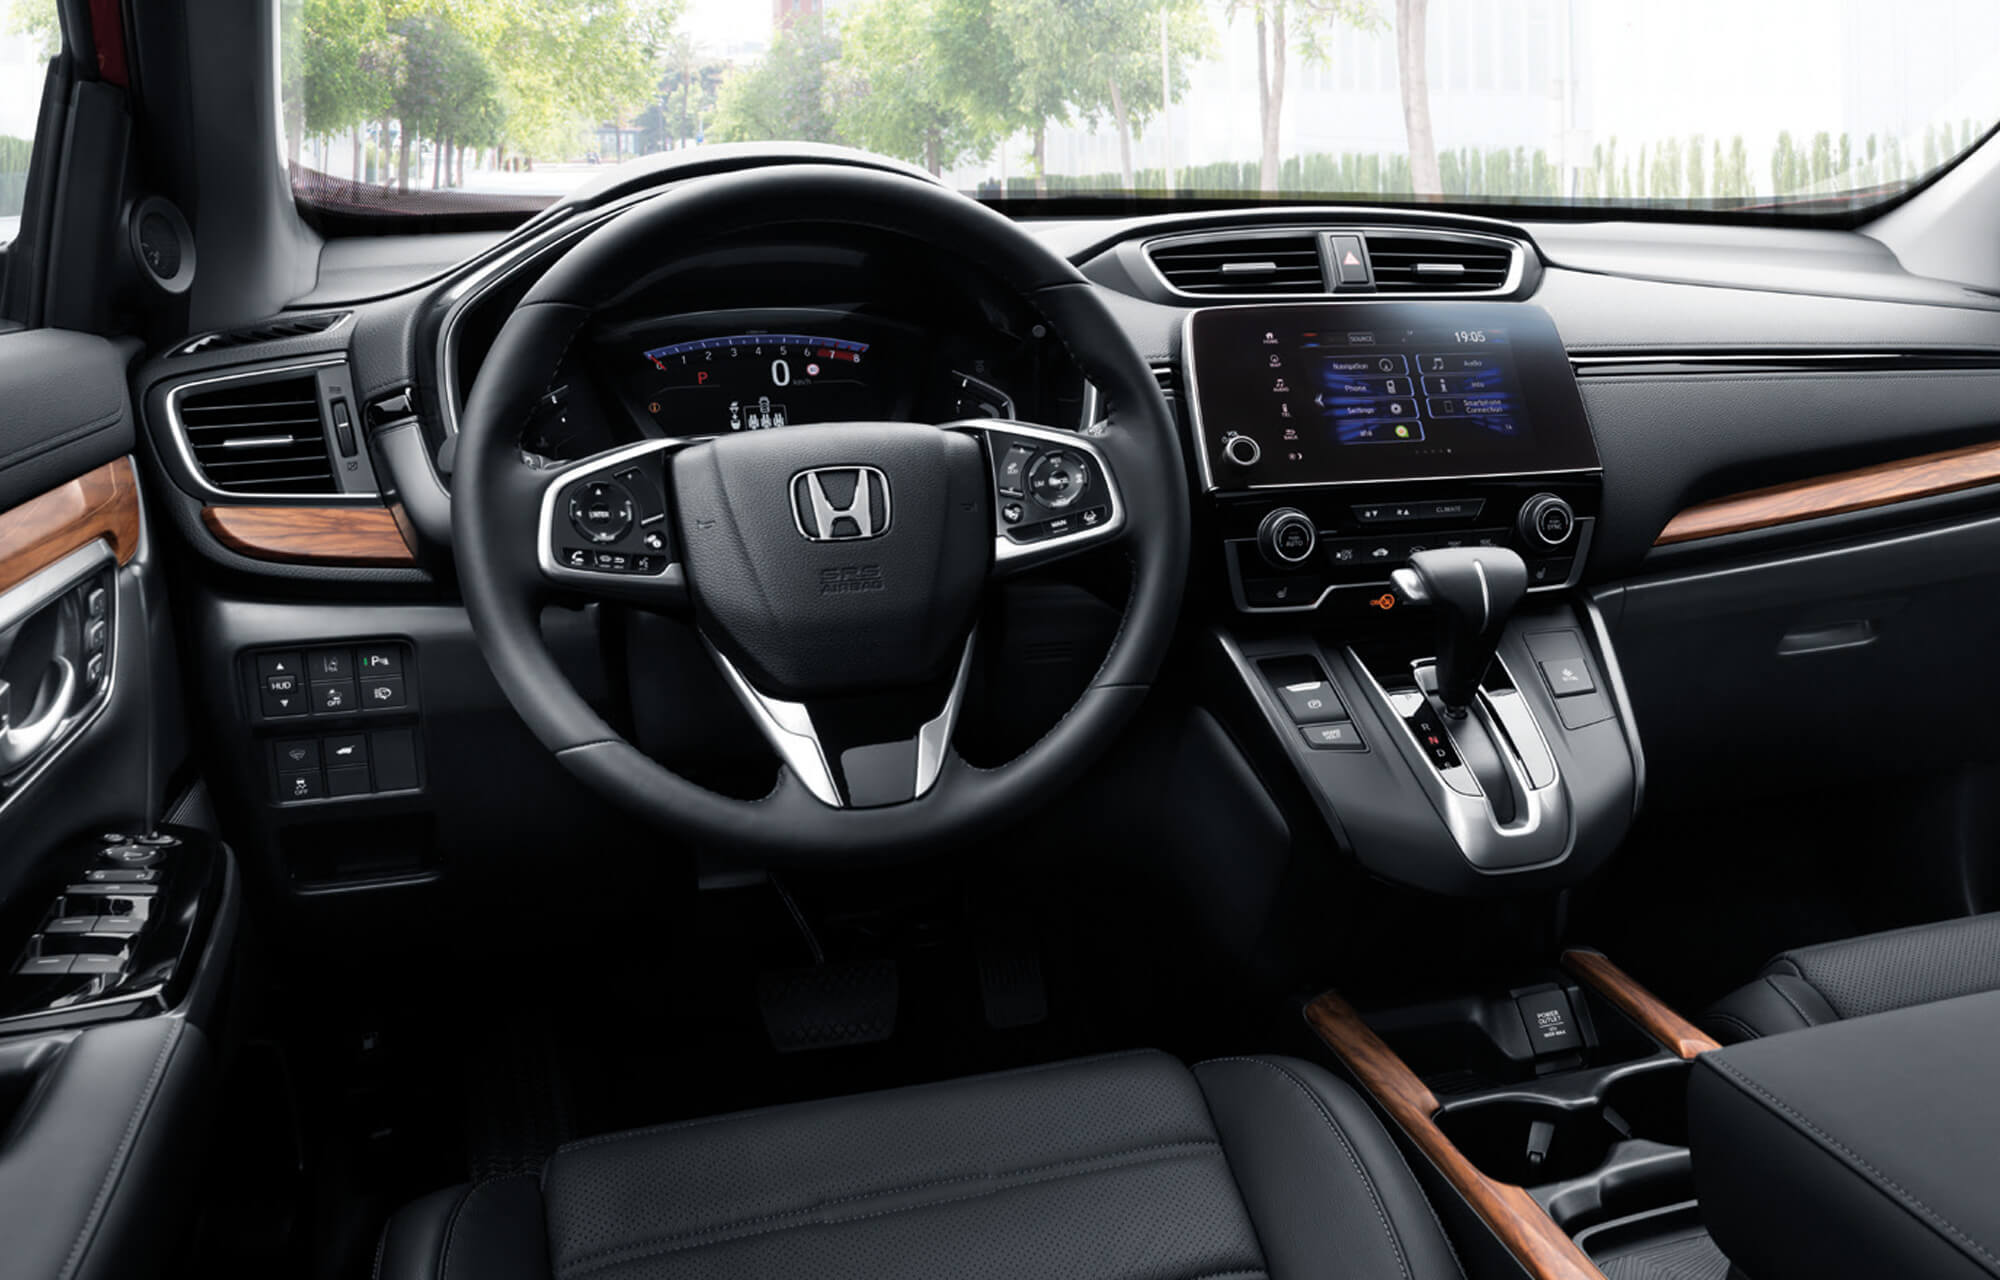 The all-new Honda CR-V